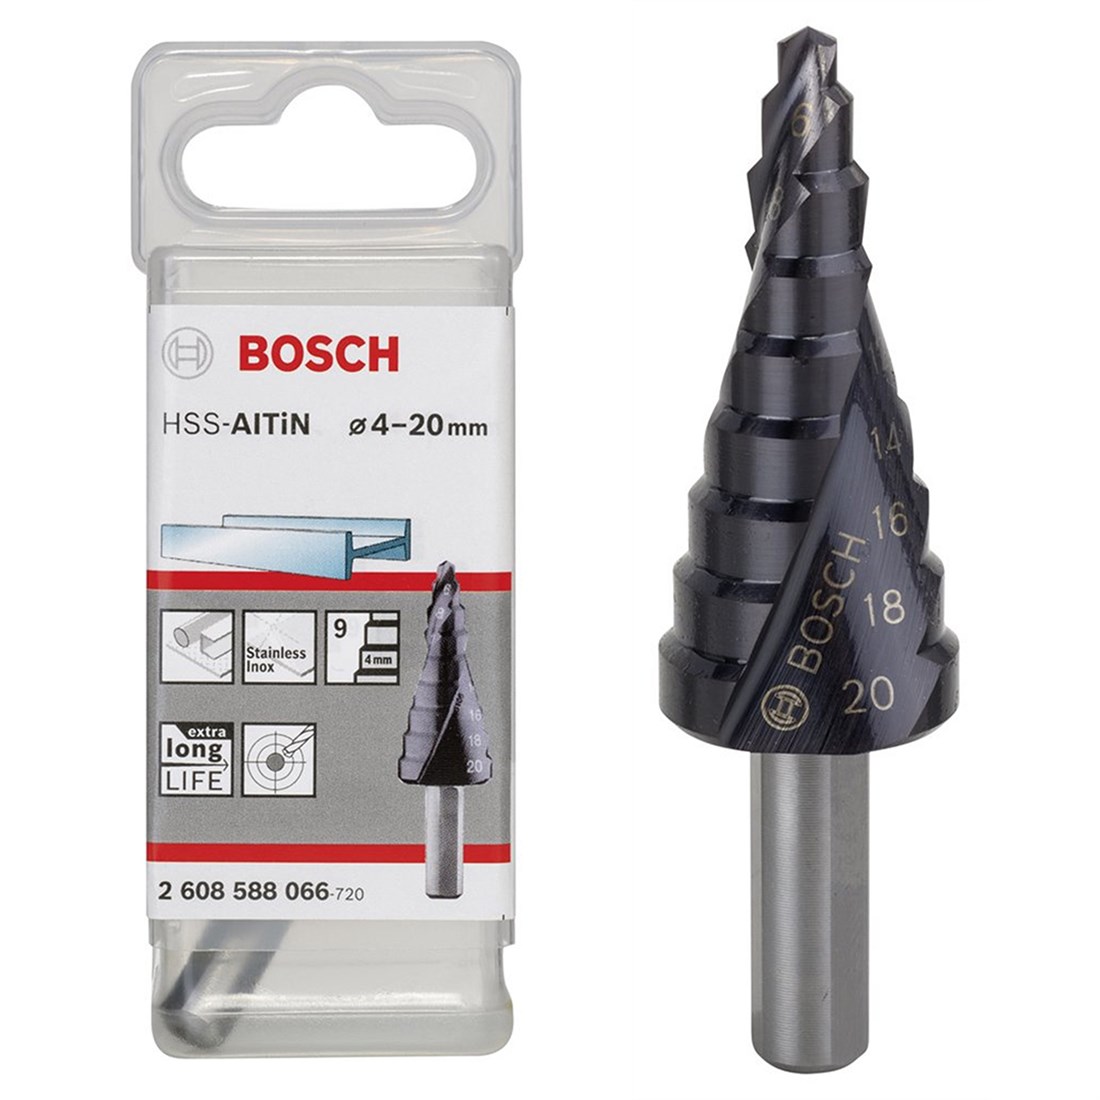 Bosch HSS-Altın 9 Kademeli Matkap Ucu 4-20 mm - 2608588066 - 7Kat